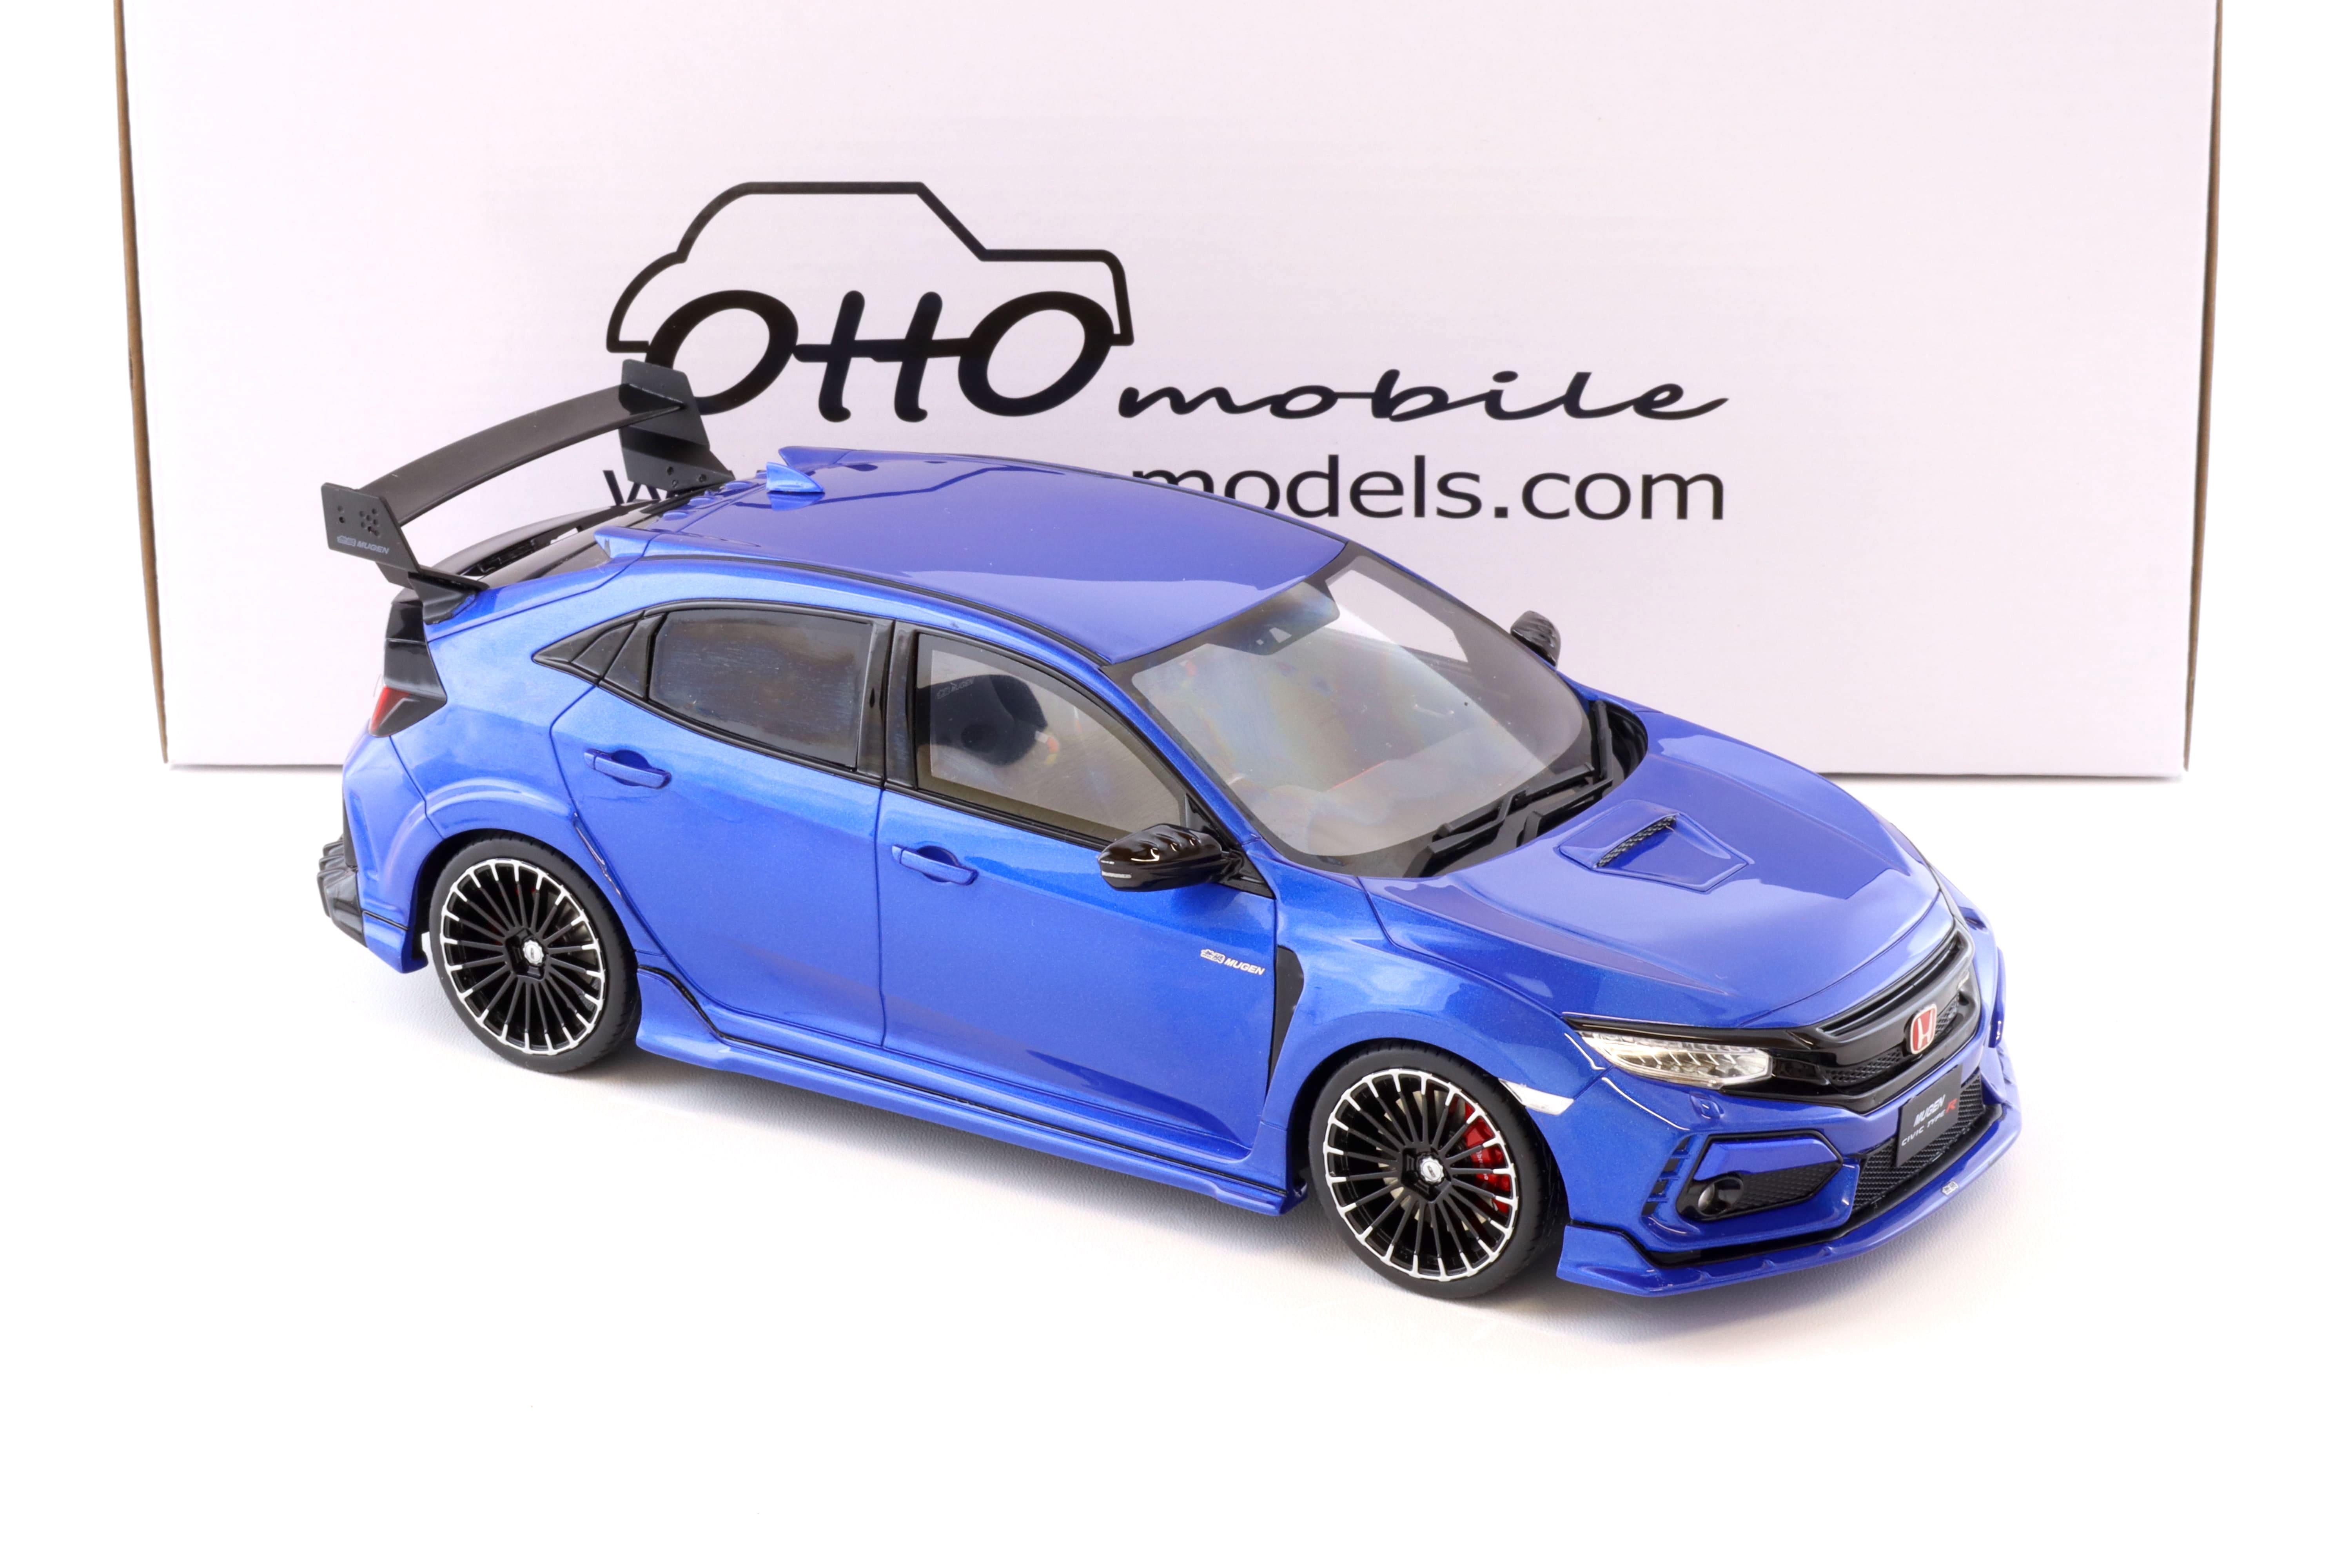 1:18 OTTO mobile OT987 Honda Civic FK8 Type R MUGEN blue metallic 2020